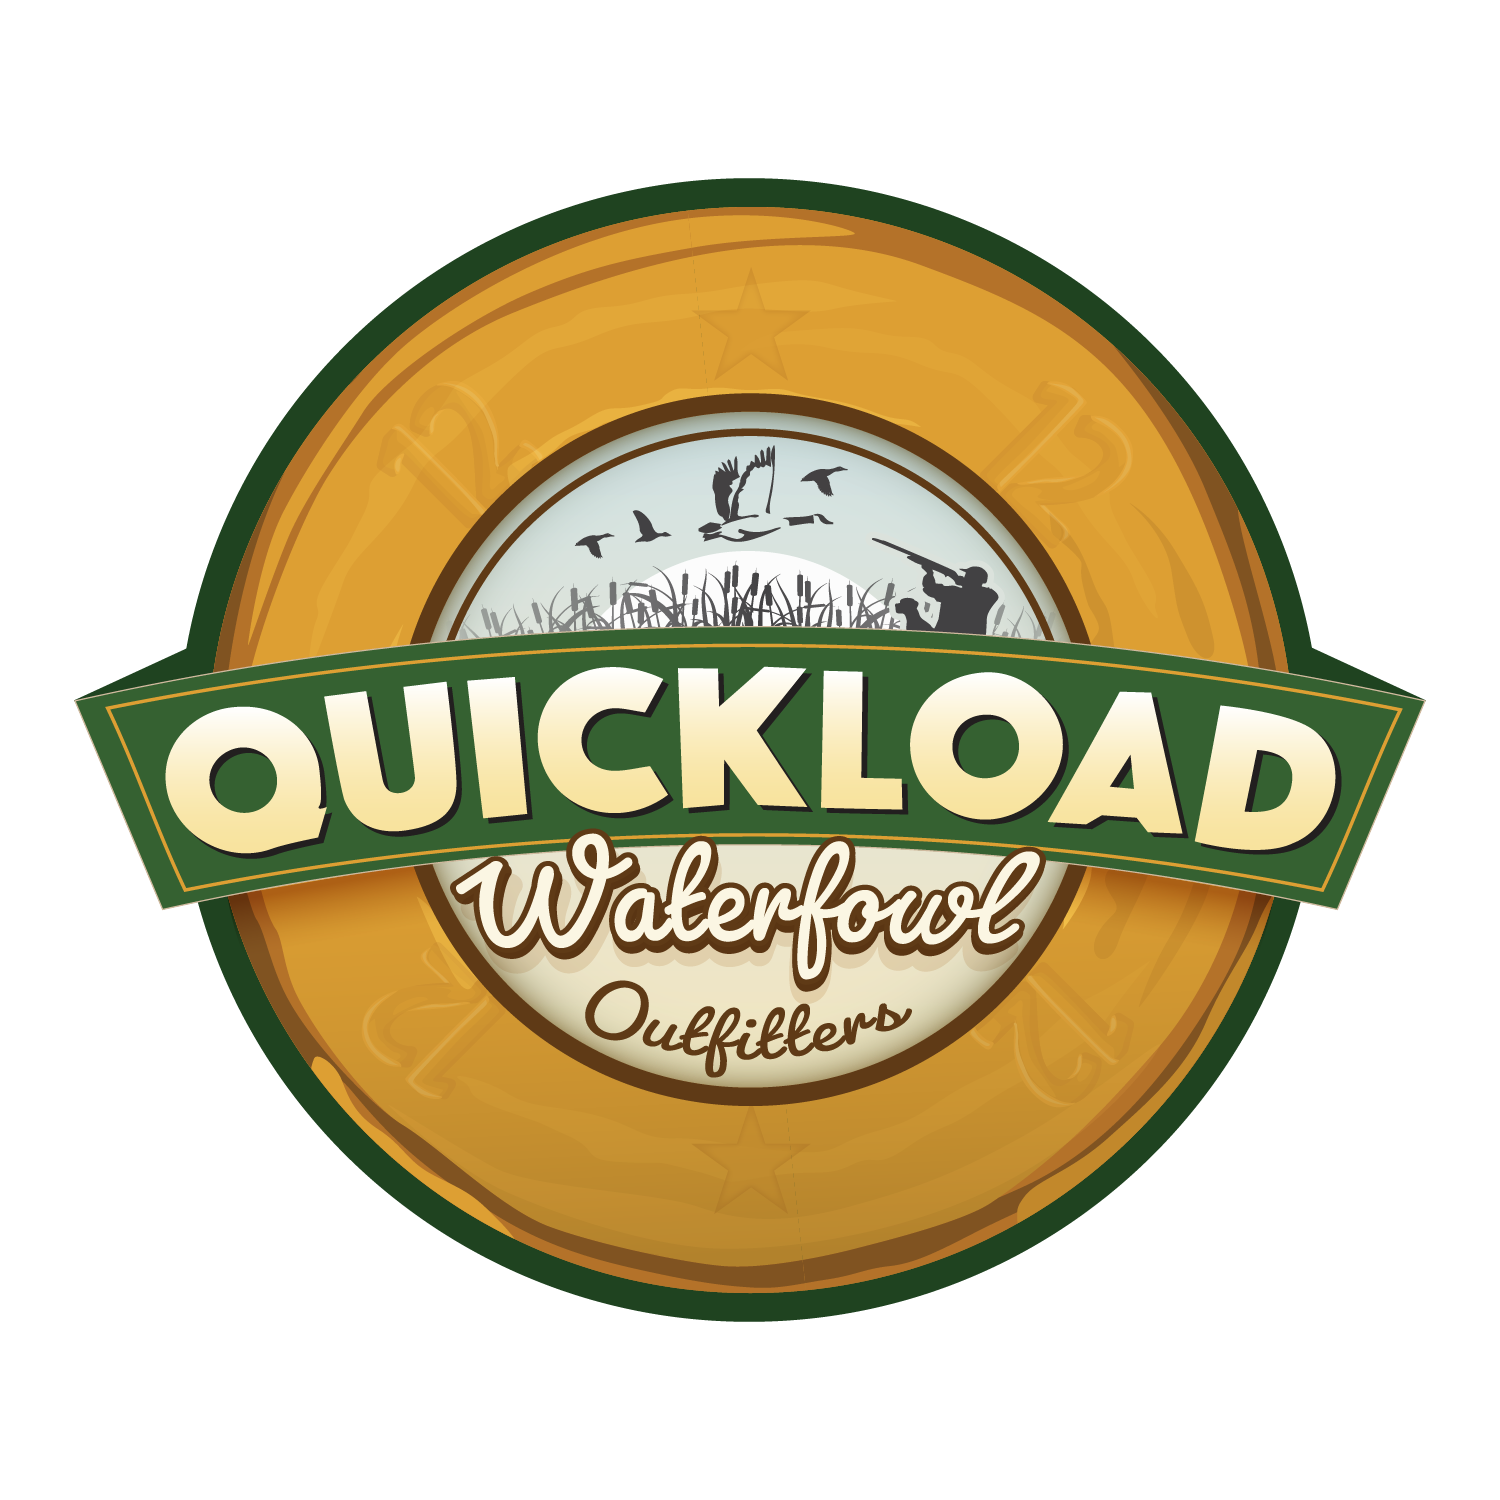 Quickload Waterfowl